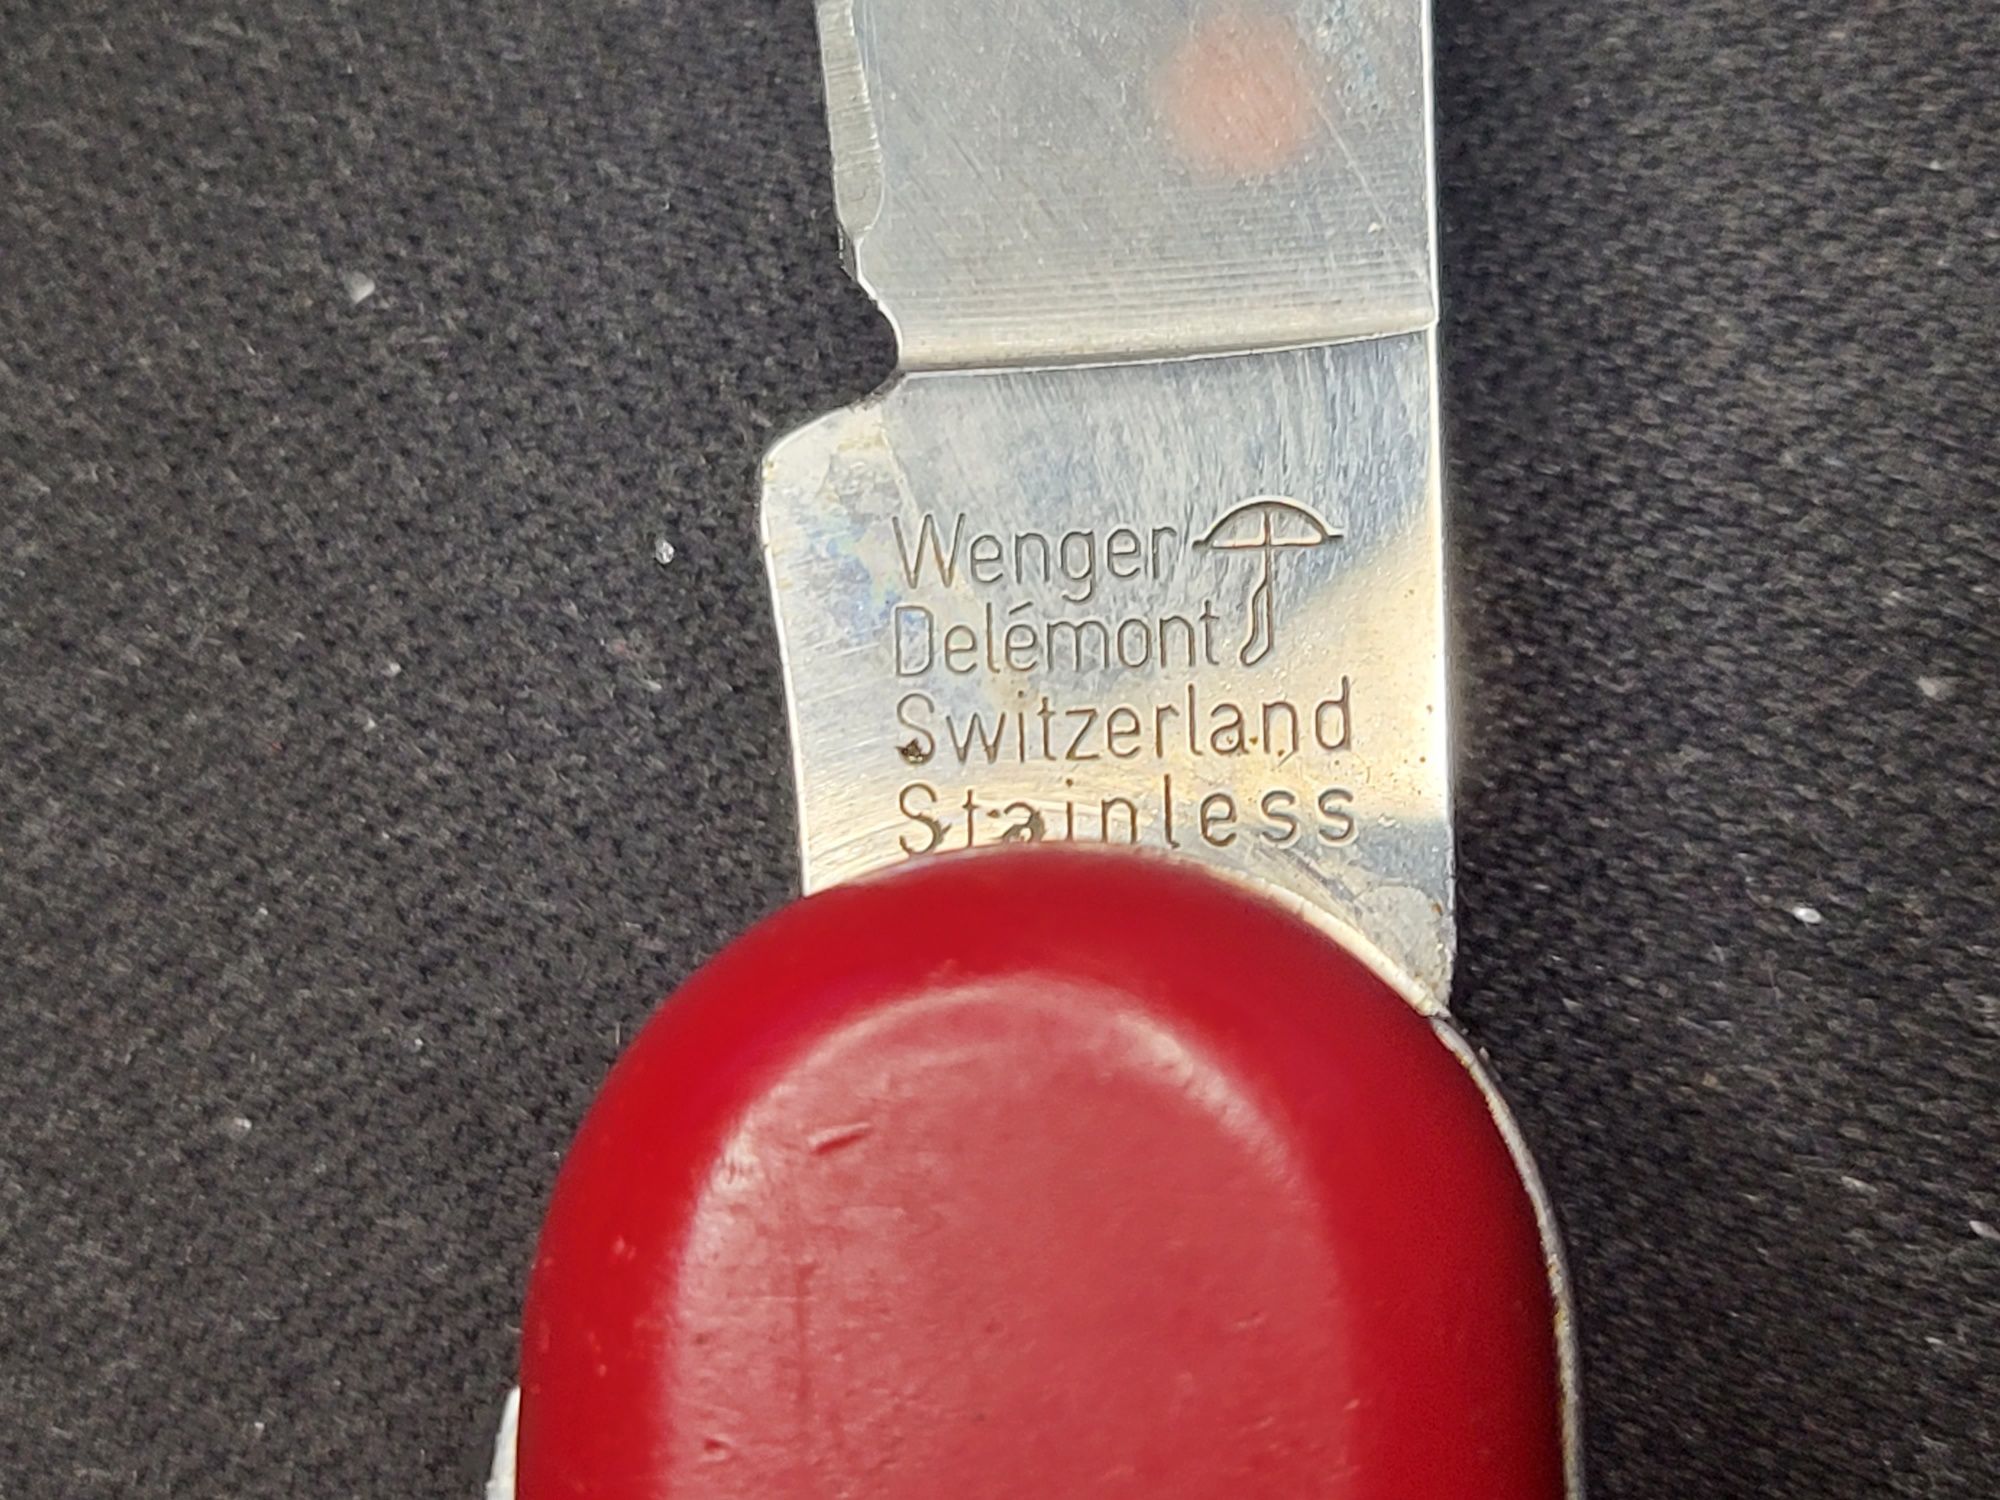 Wenger Delemont Switzerland Stainless Swiss Multitool